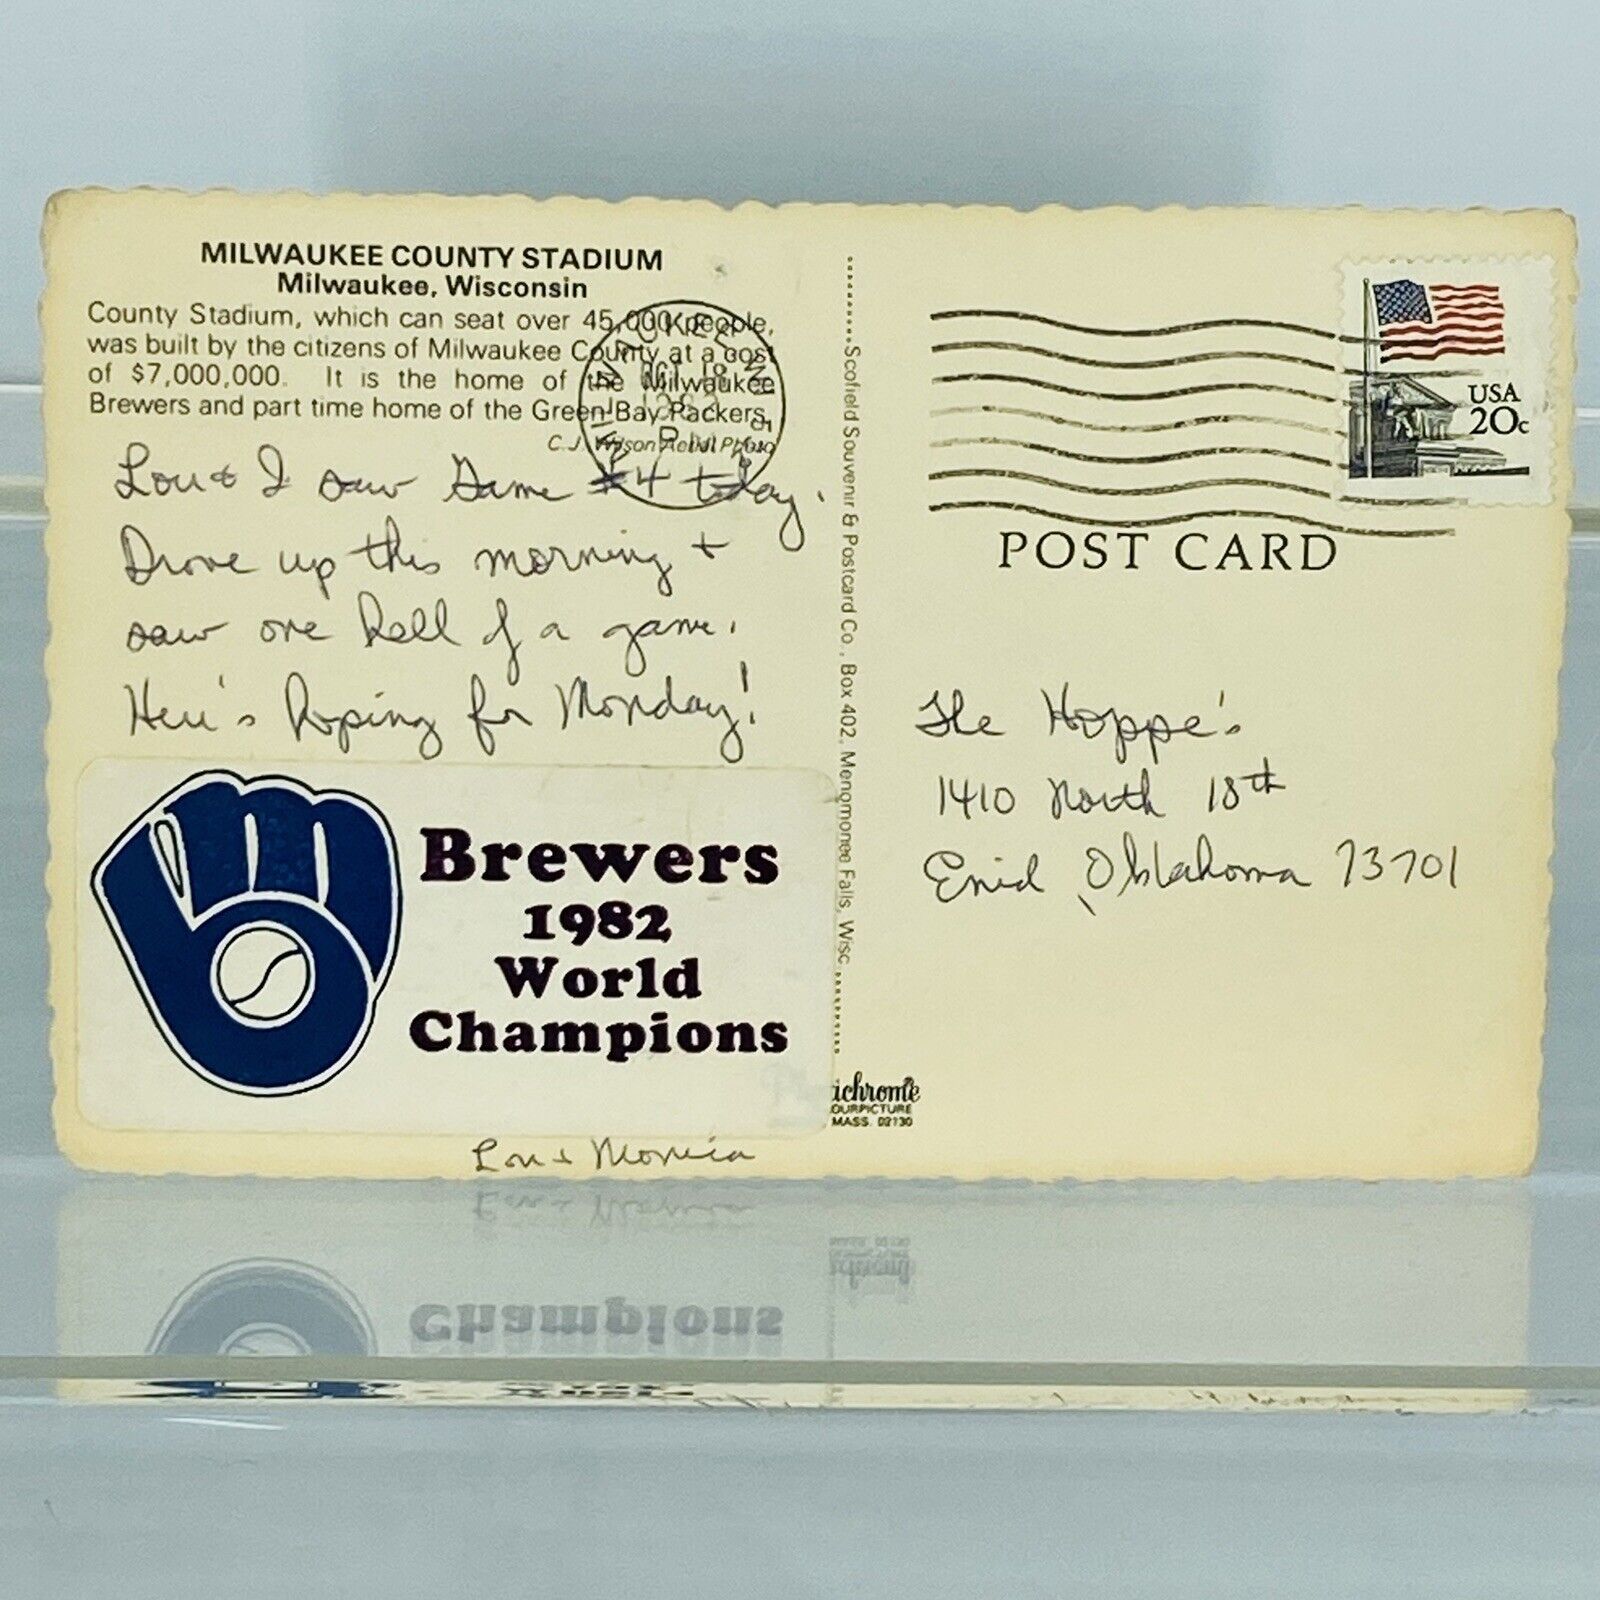 1982 World Series Postcard Declares Brewers Win World Series.  Oops